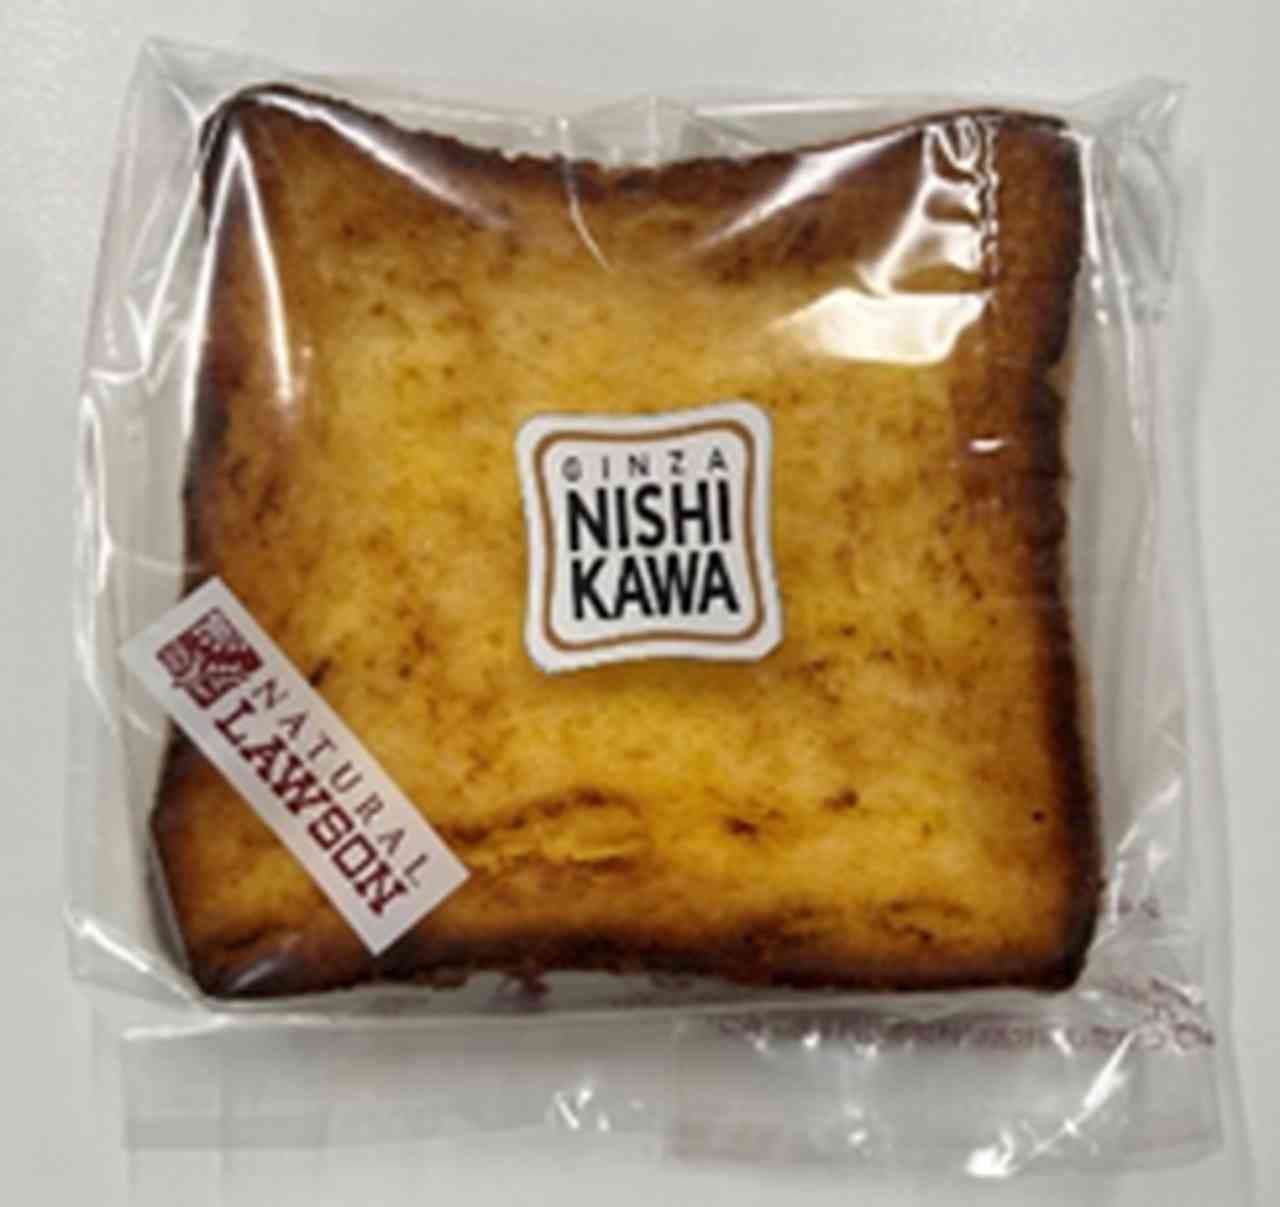 Natural Lawson "French Toast supervised by Ginza Nishikawa